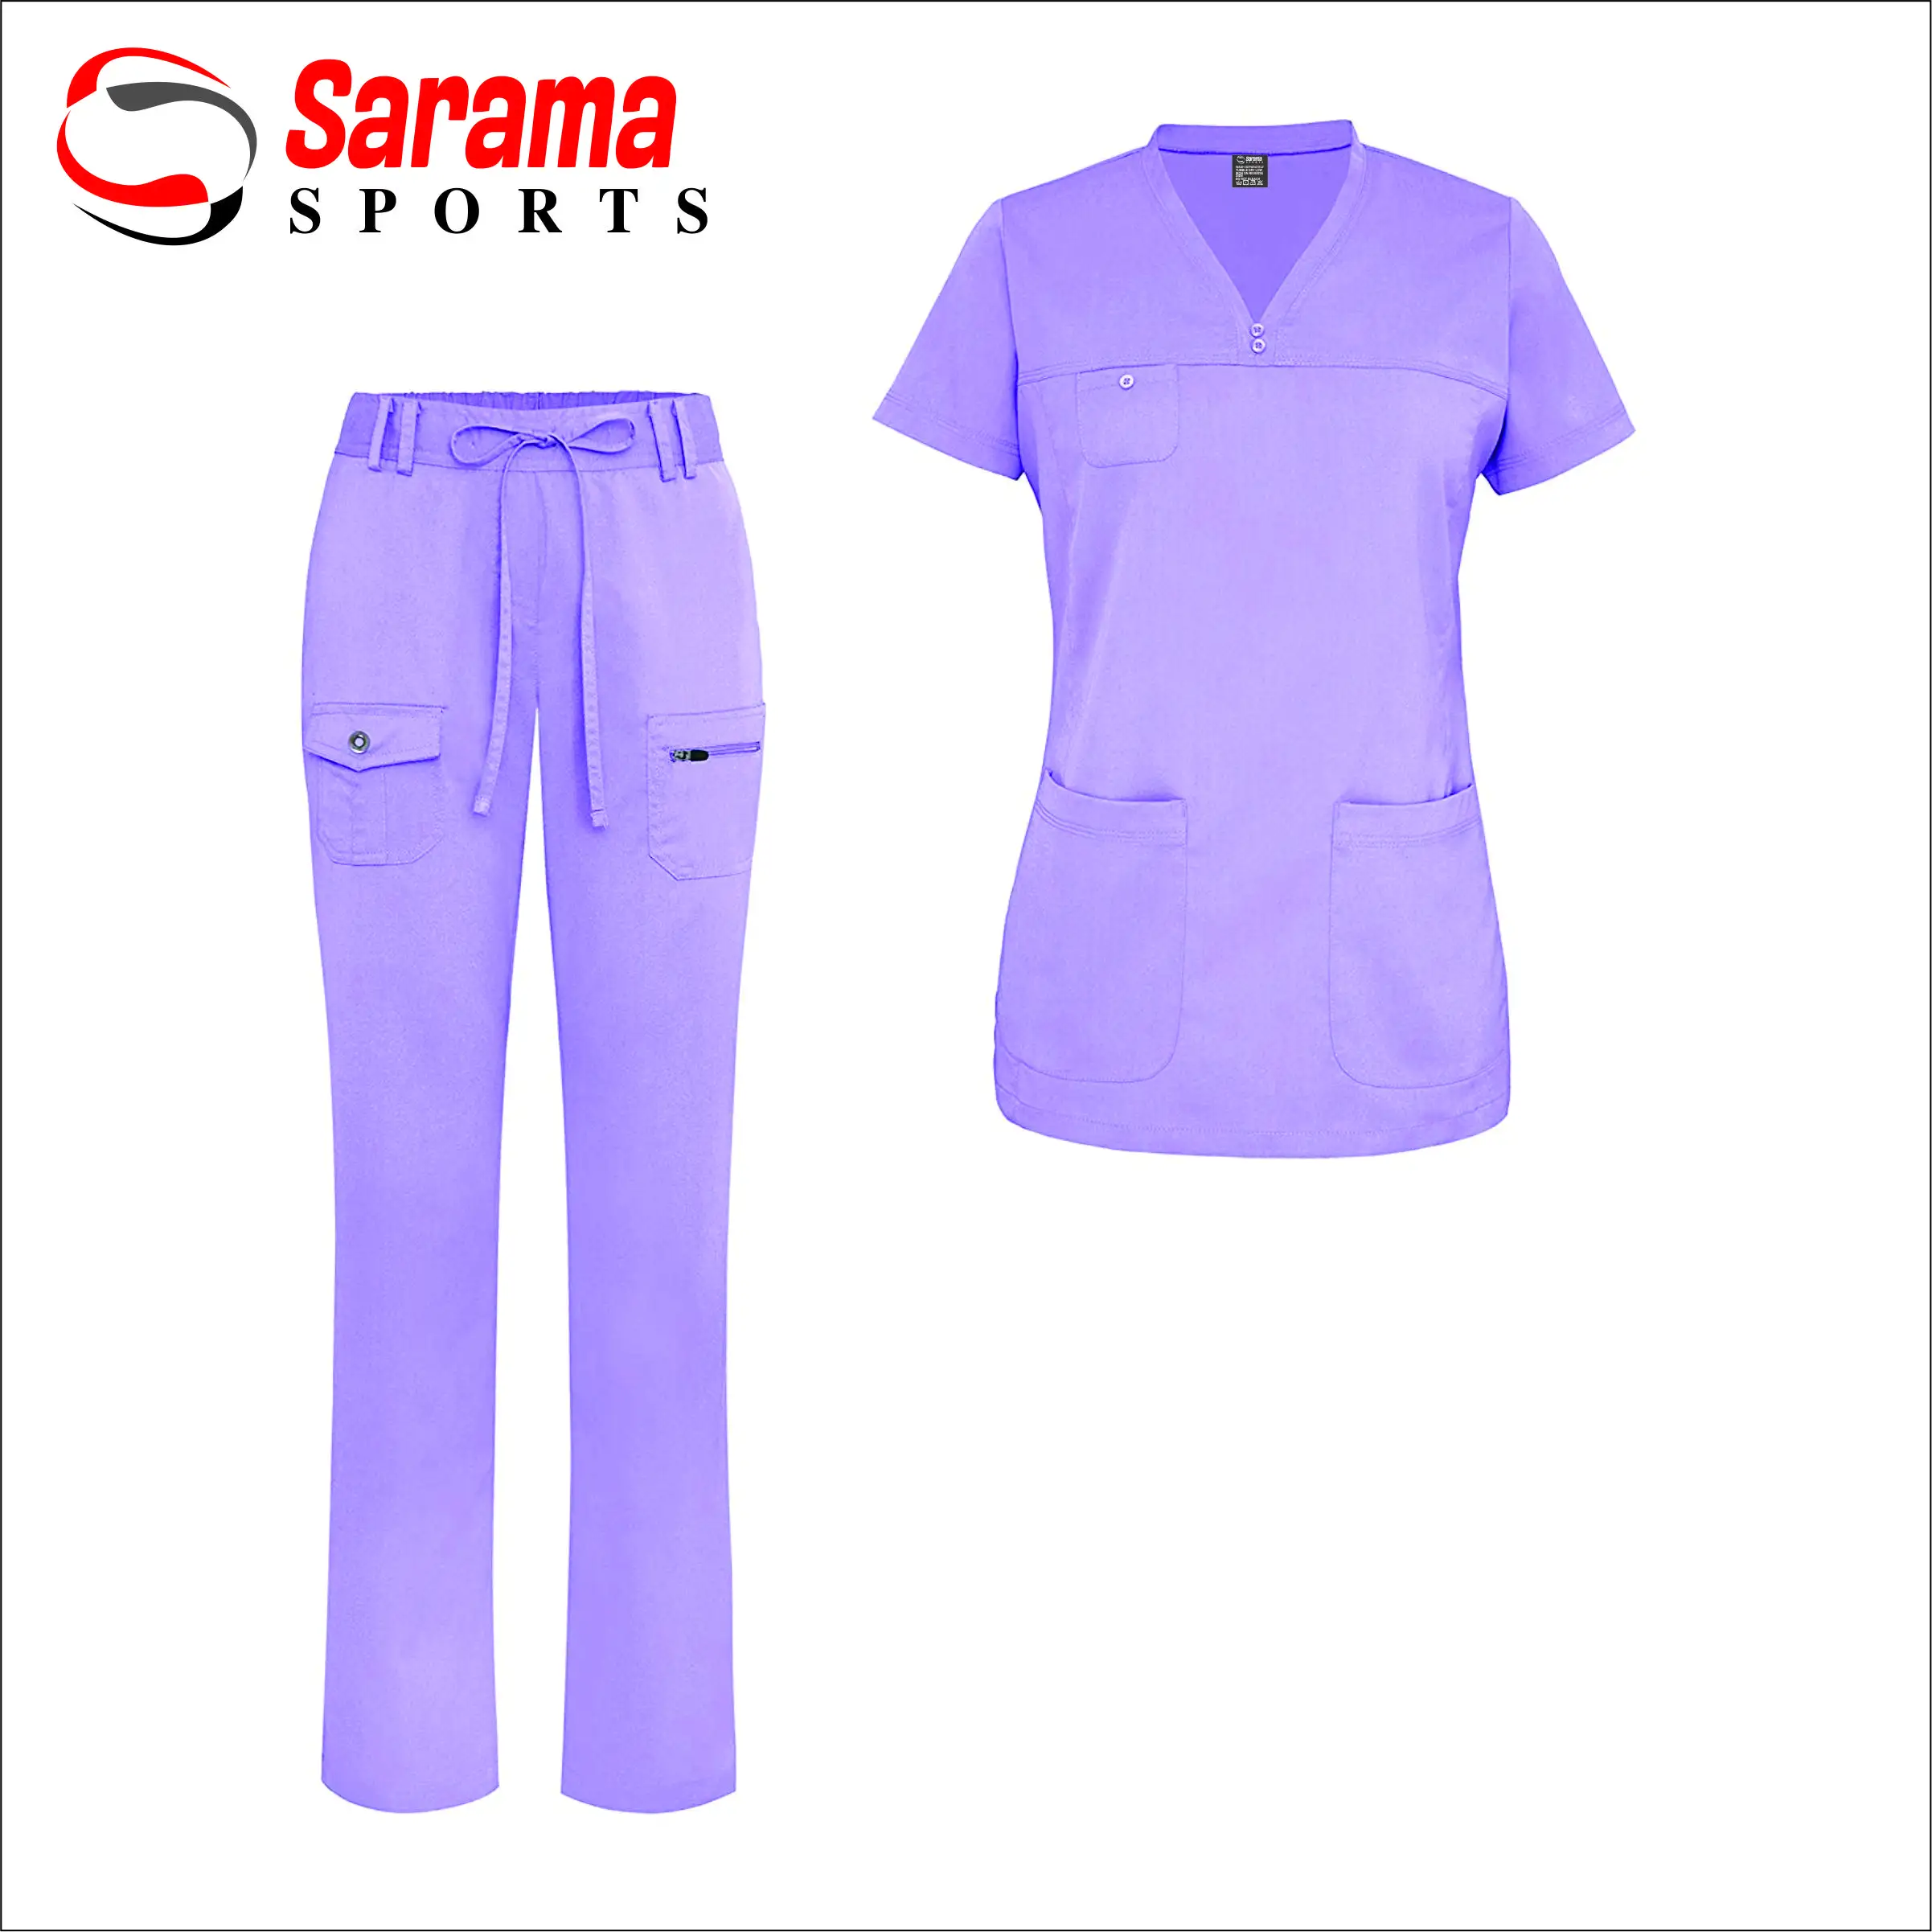 Whitetal Design Uniformes Women Joggers Set Medico Scrubs Uniforms Short/long Sleeve Men/women